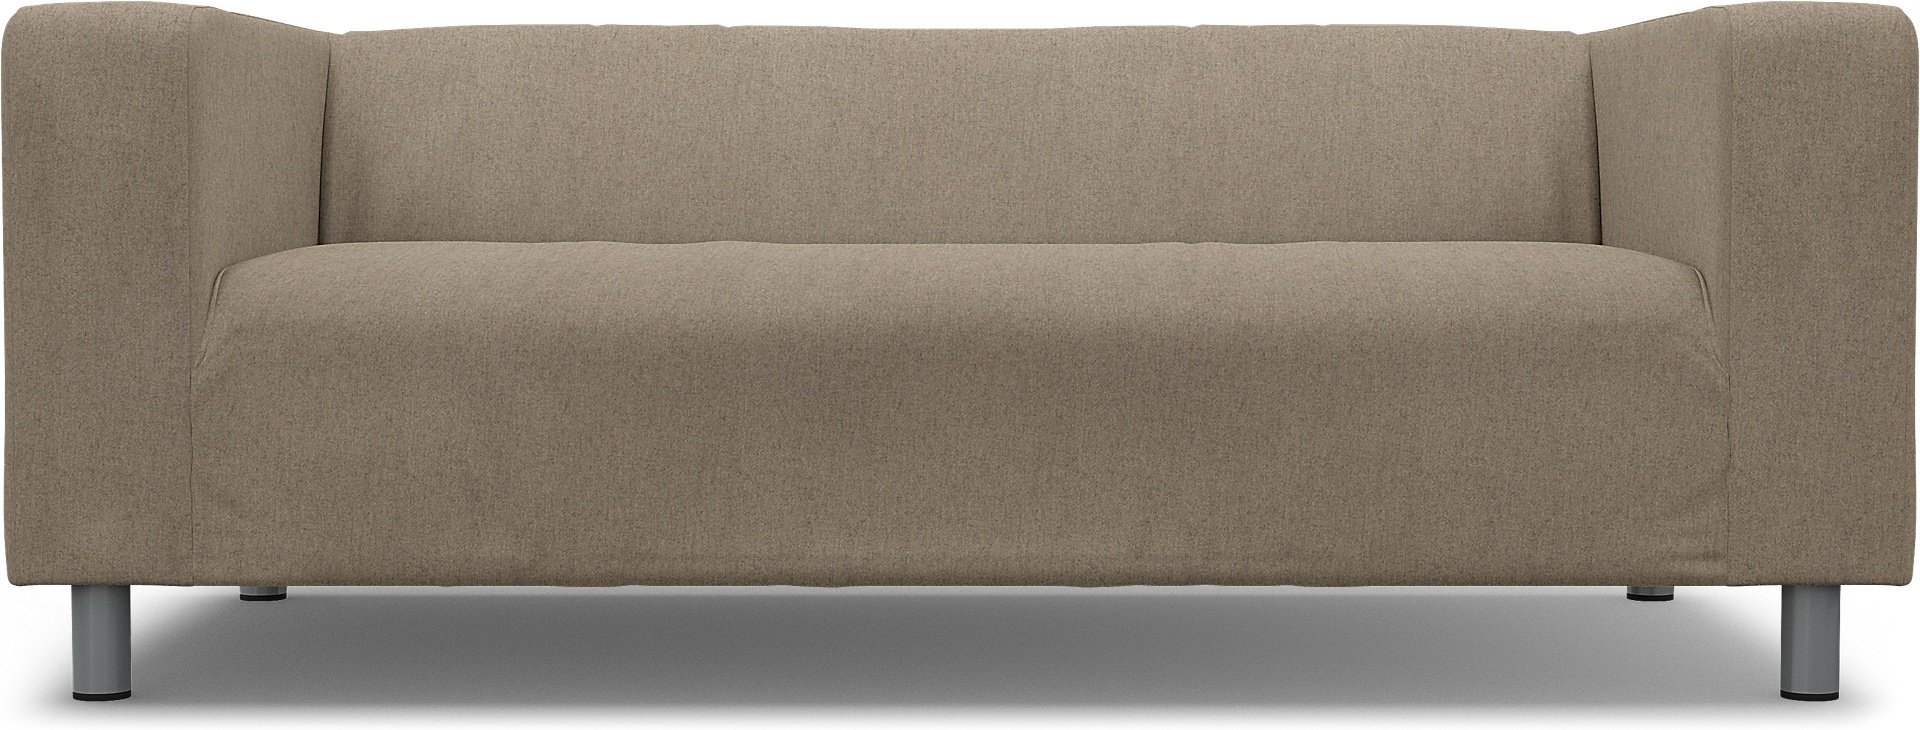 IKEA - Klippan 2 Seater Sofa Cover, Birch, Wool - Bemz